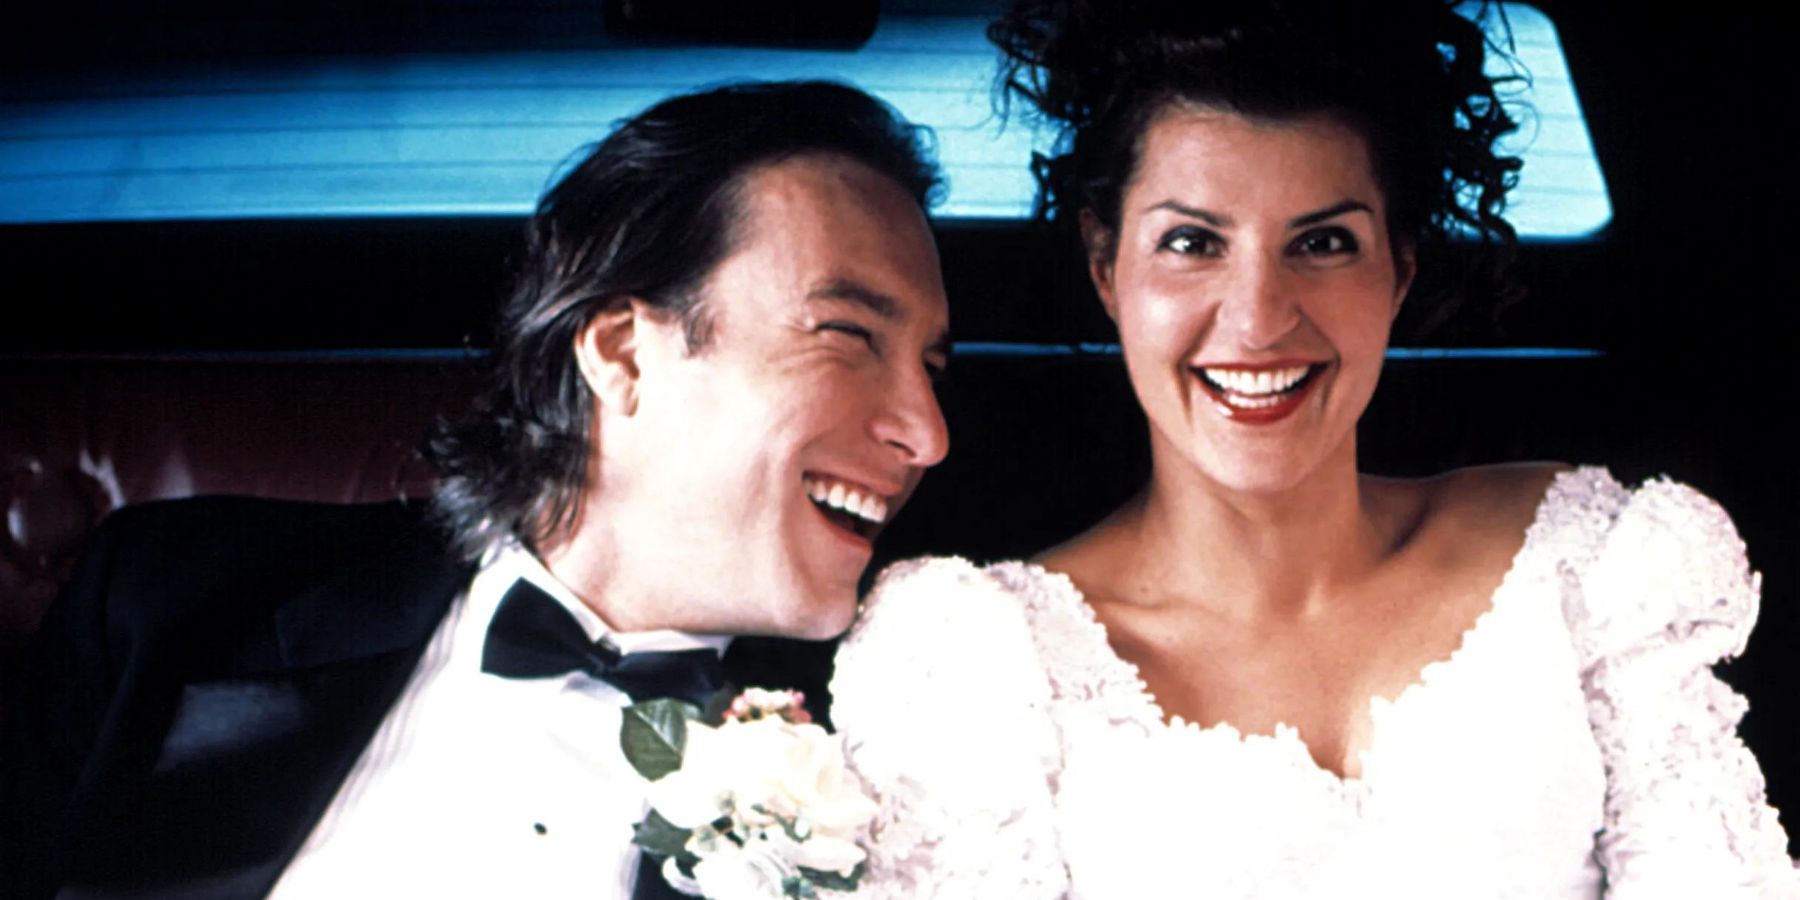 John Corbett and Nia Vardalos in My Big Fat Greek Wedding getaway car